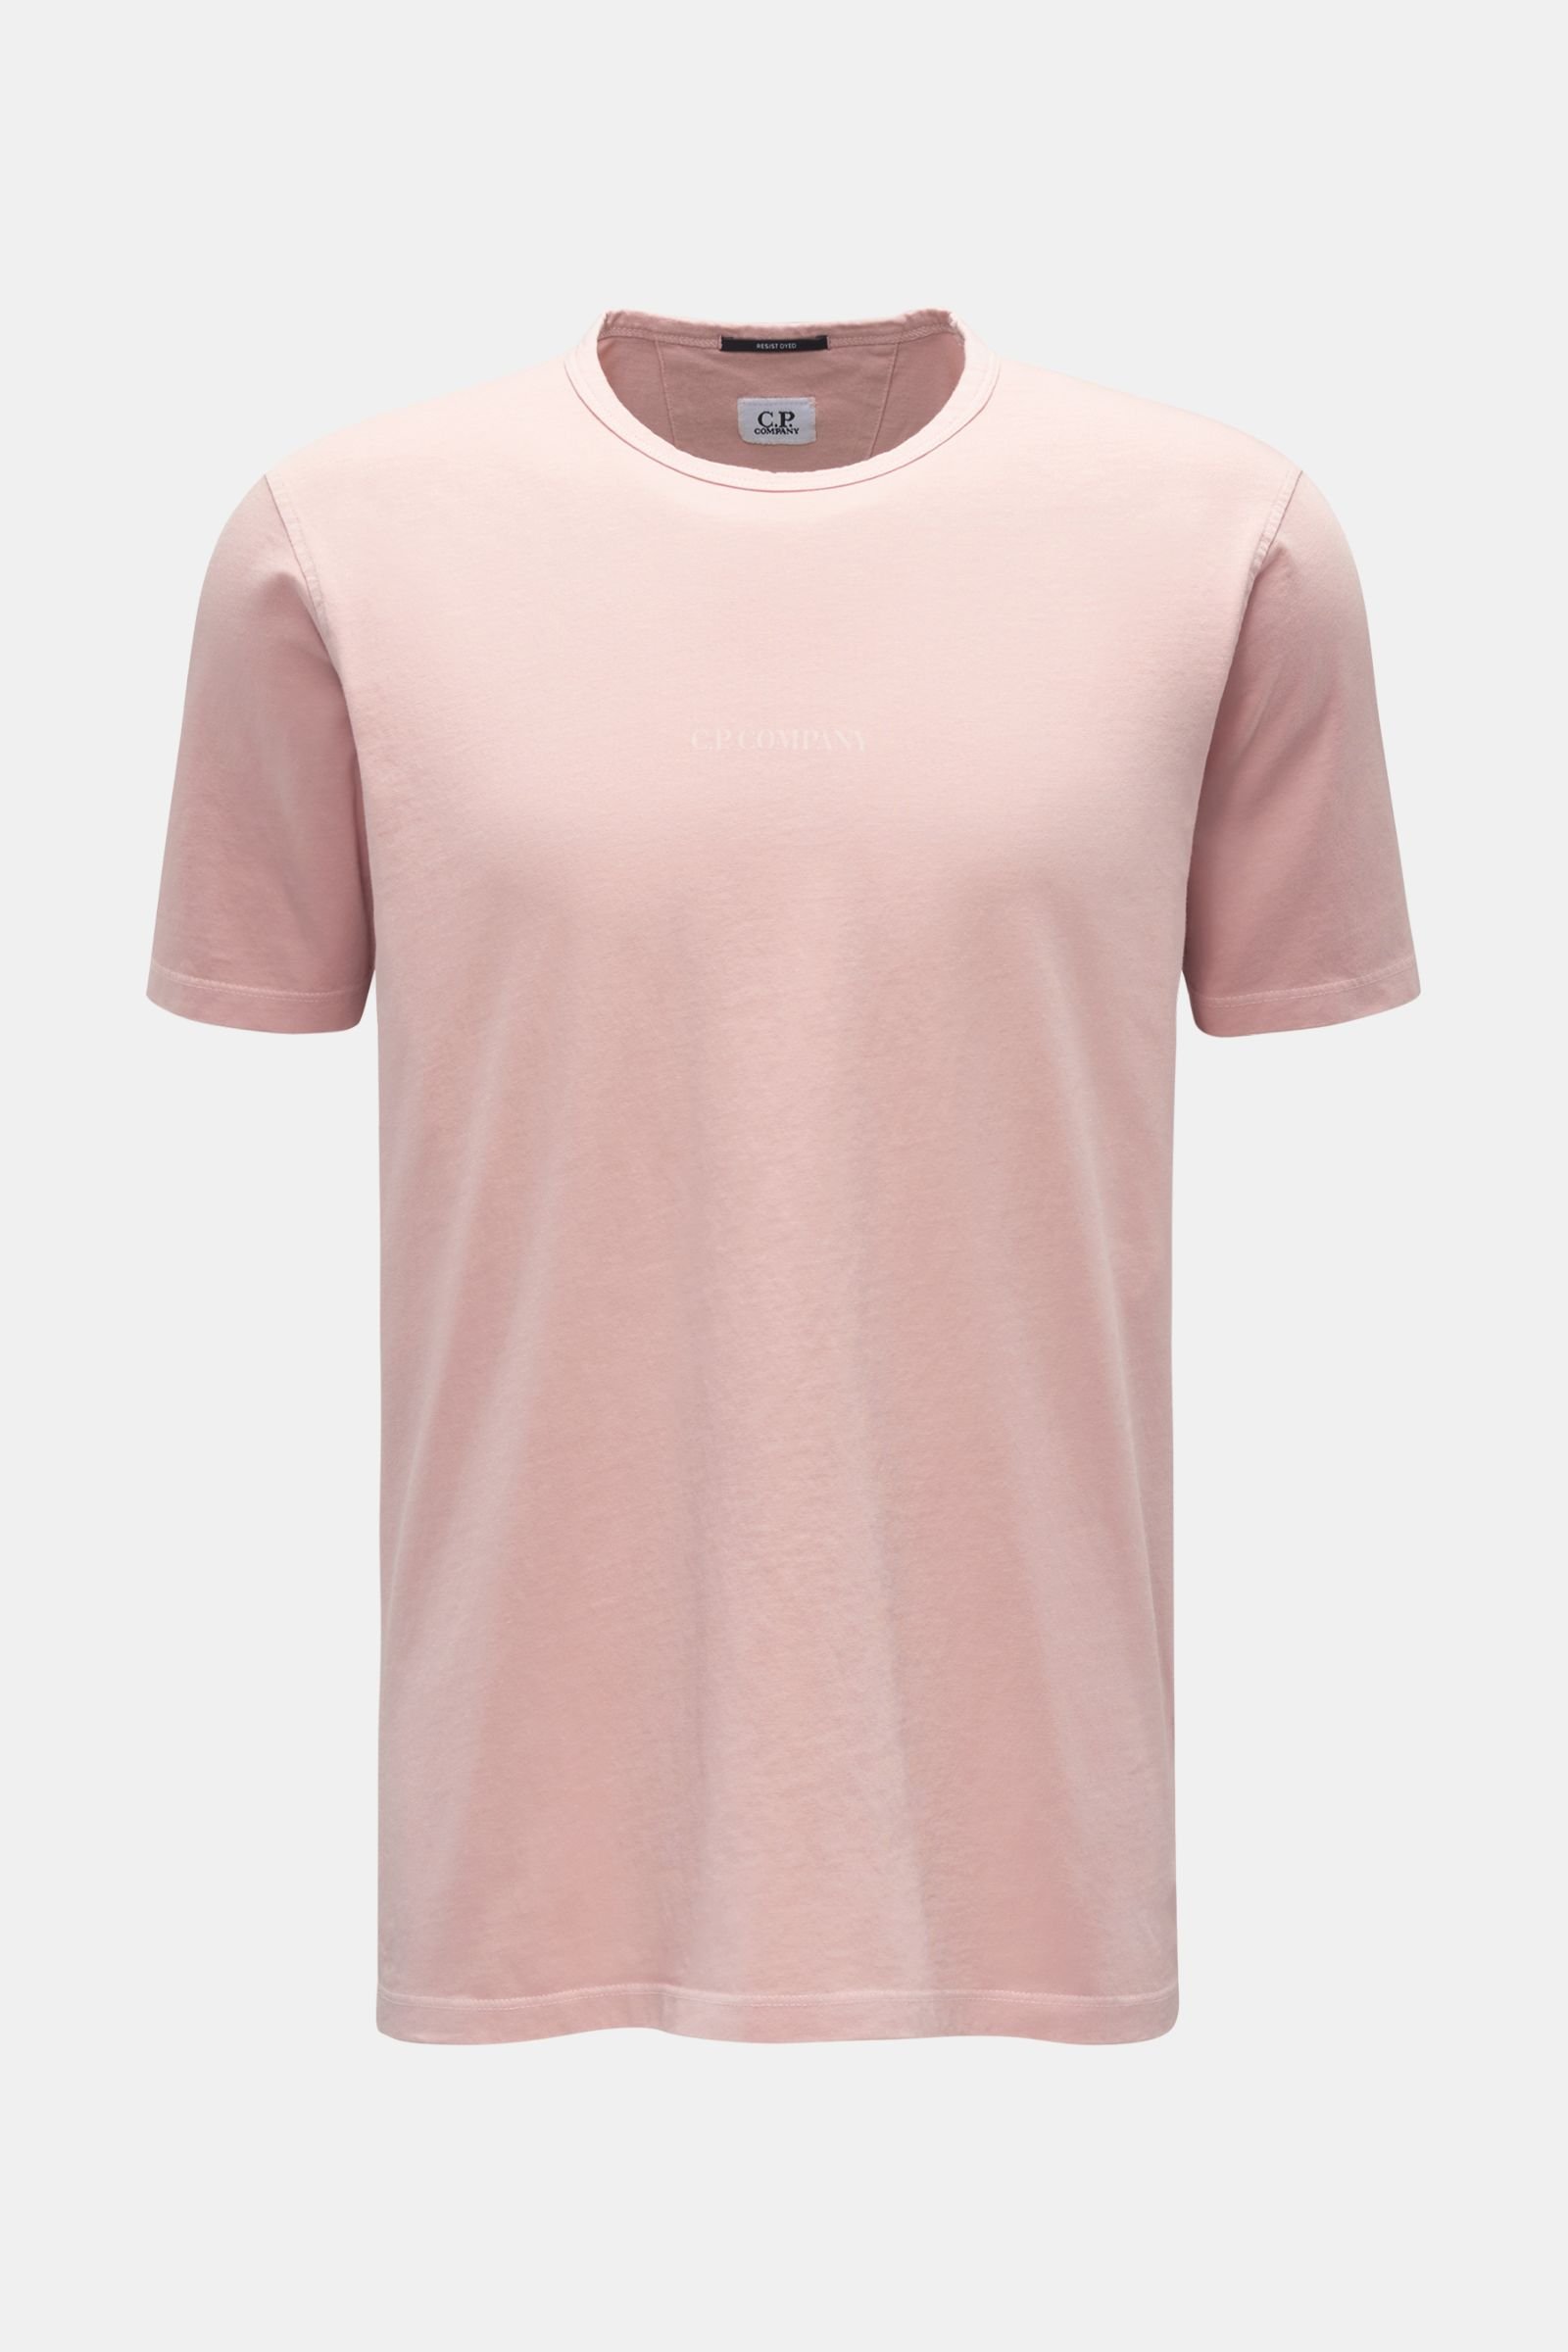 Crew neck T-shirt rose